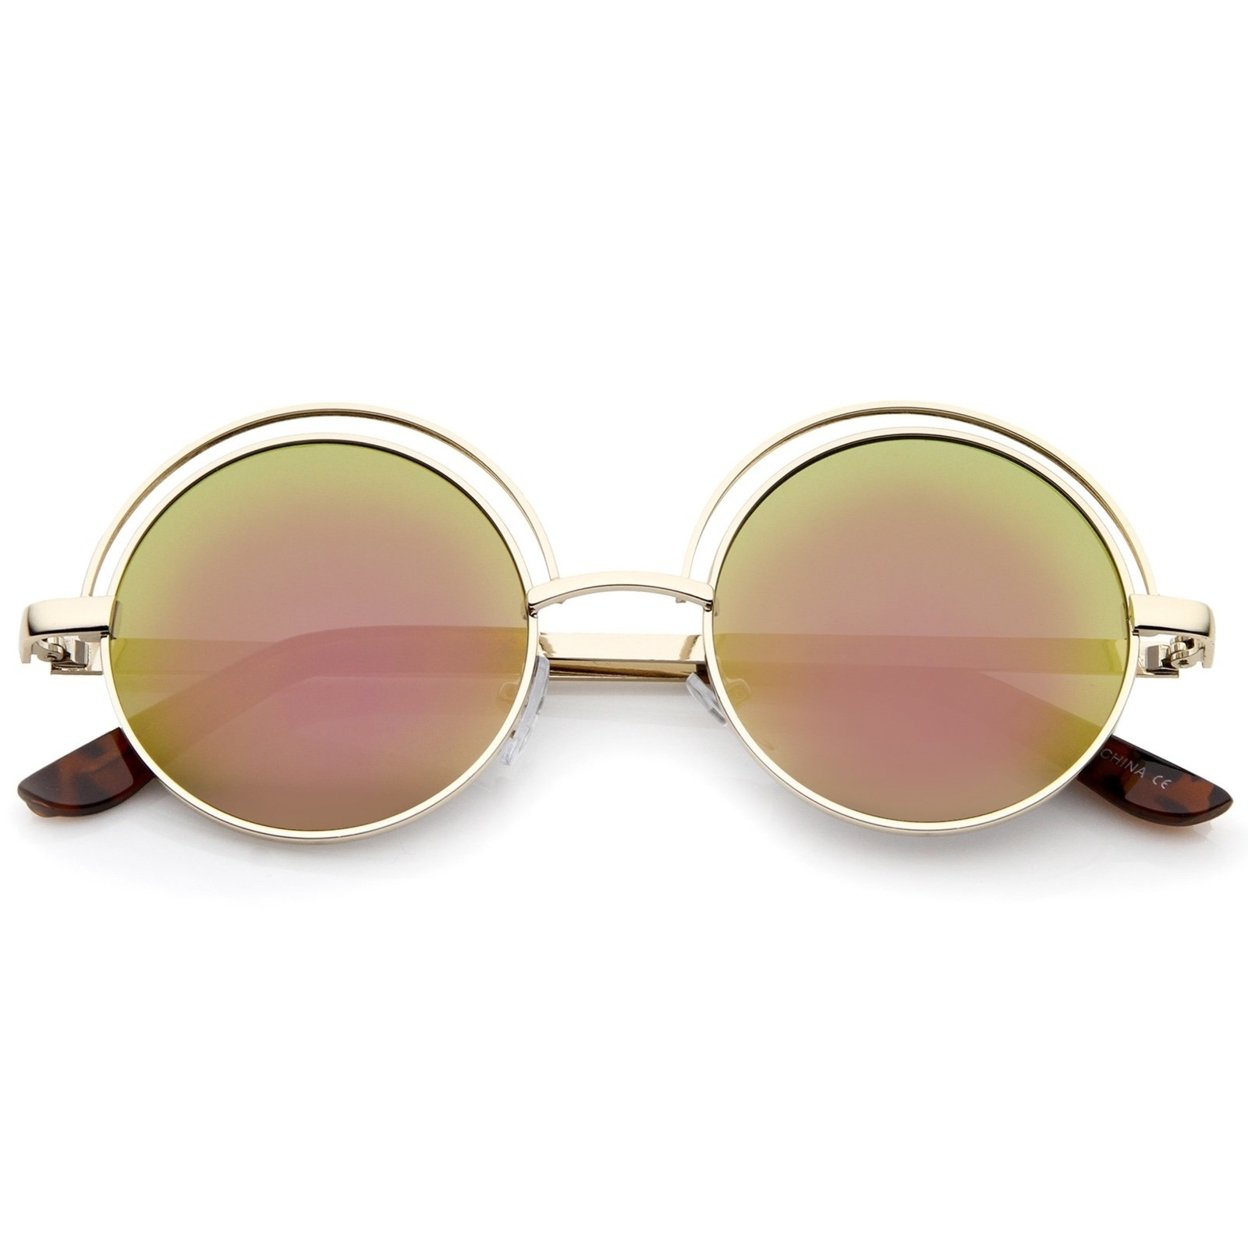 Retro Open Metal Colored Mirror Flat Lens Round Sunglasses 48mm - Gold / Green Mirror